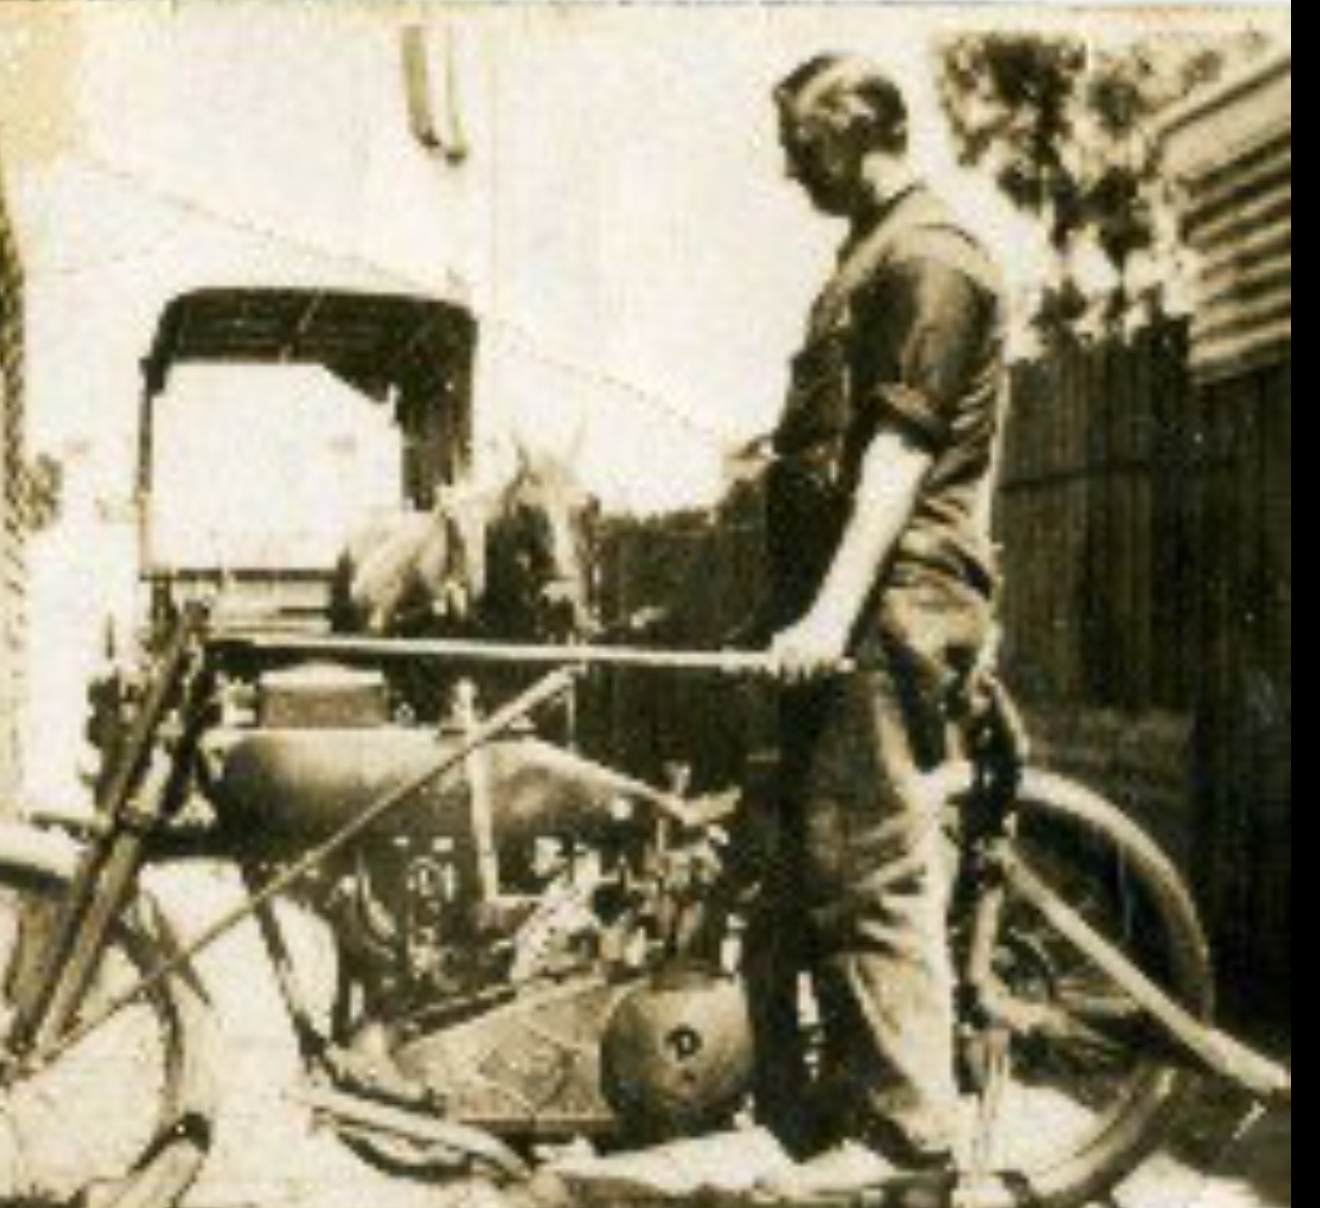 Wilfred Harold Arthur Topp's motorbike 